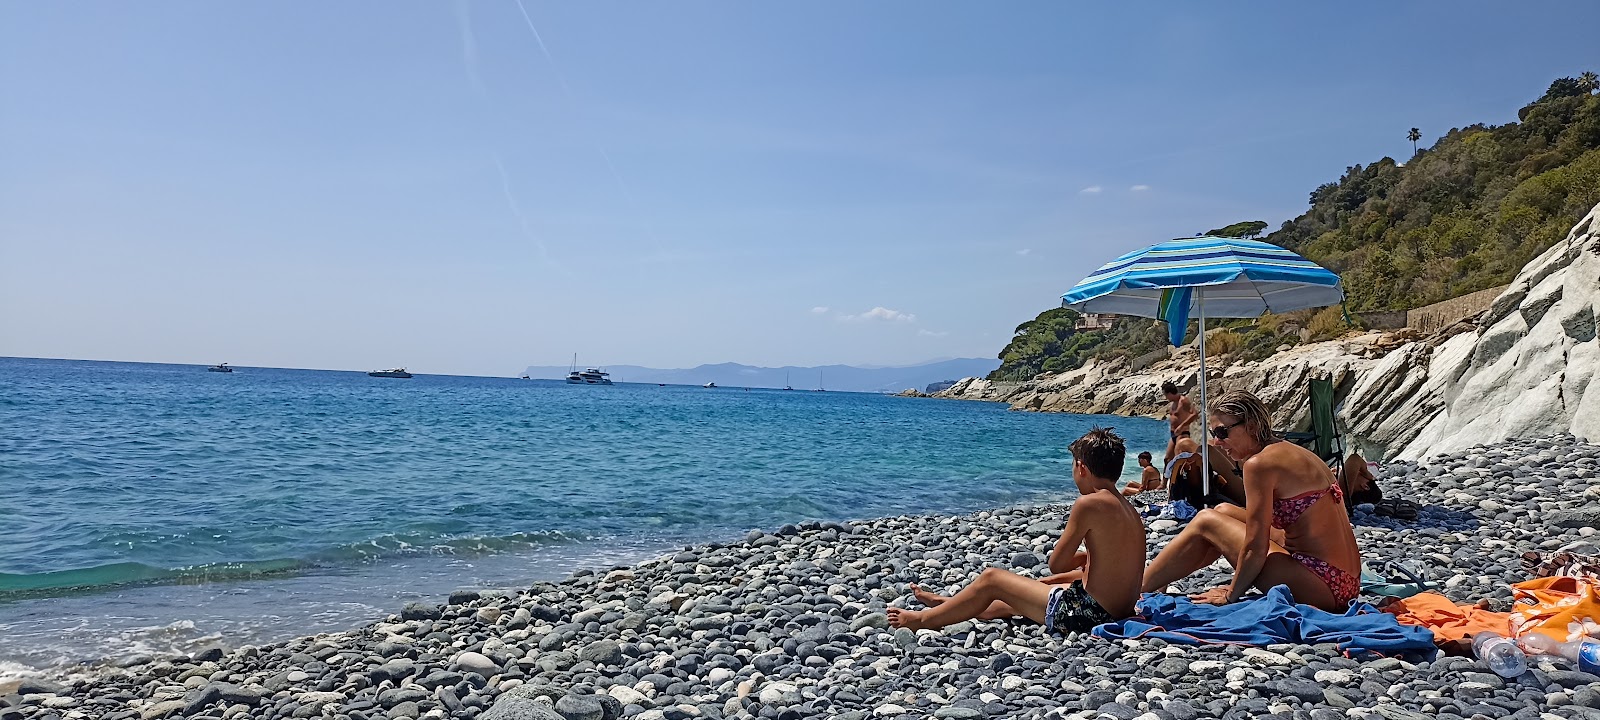 Foto av Spiaggia libera Abbelinou bekvämlighetsområde